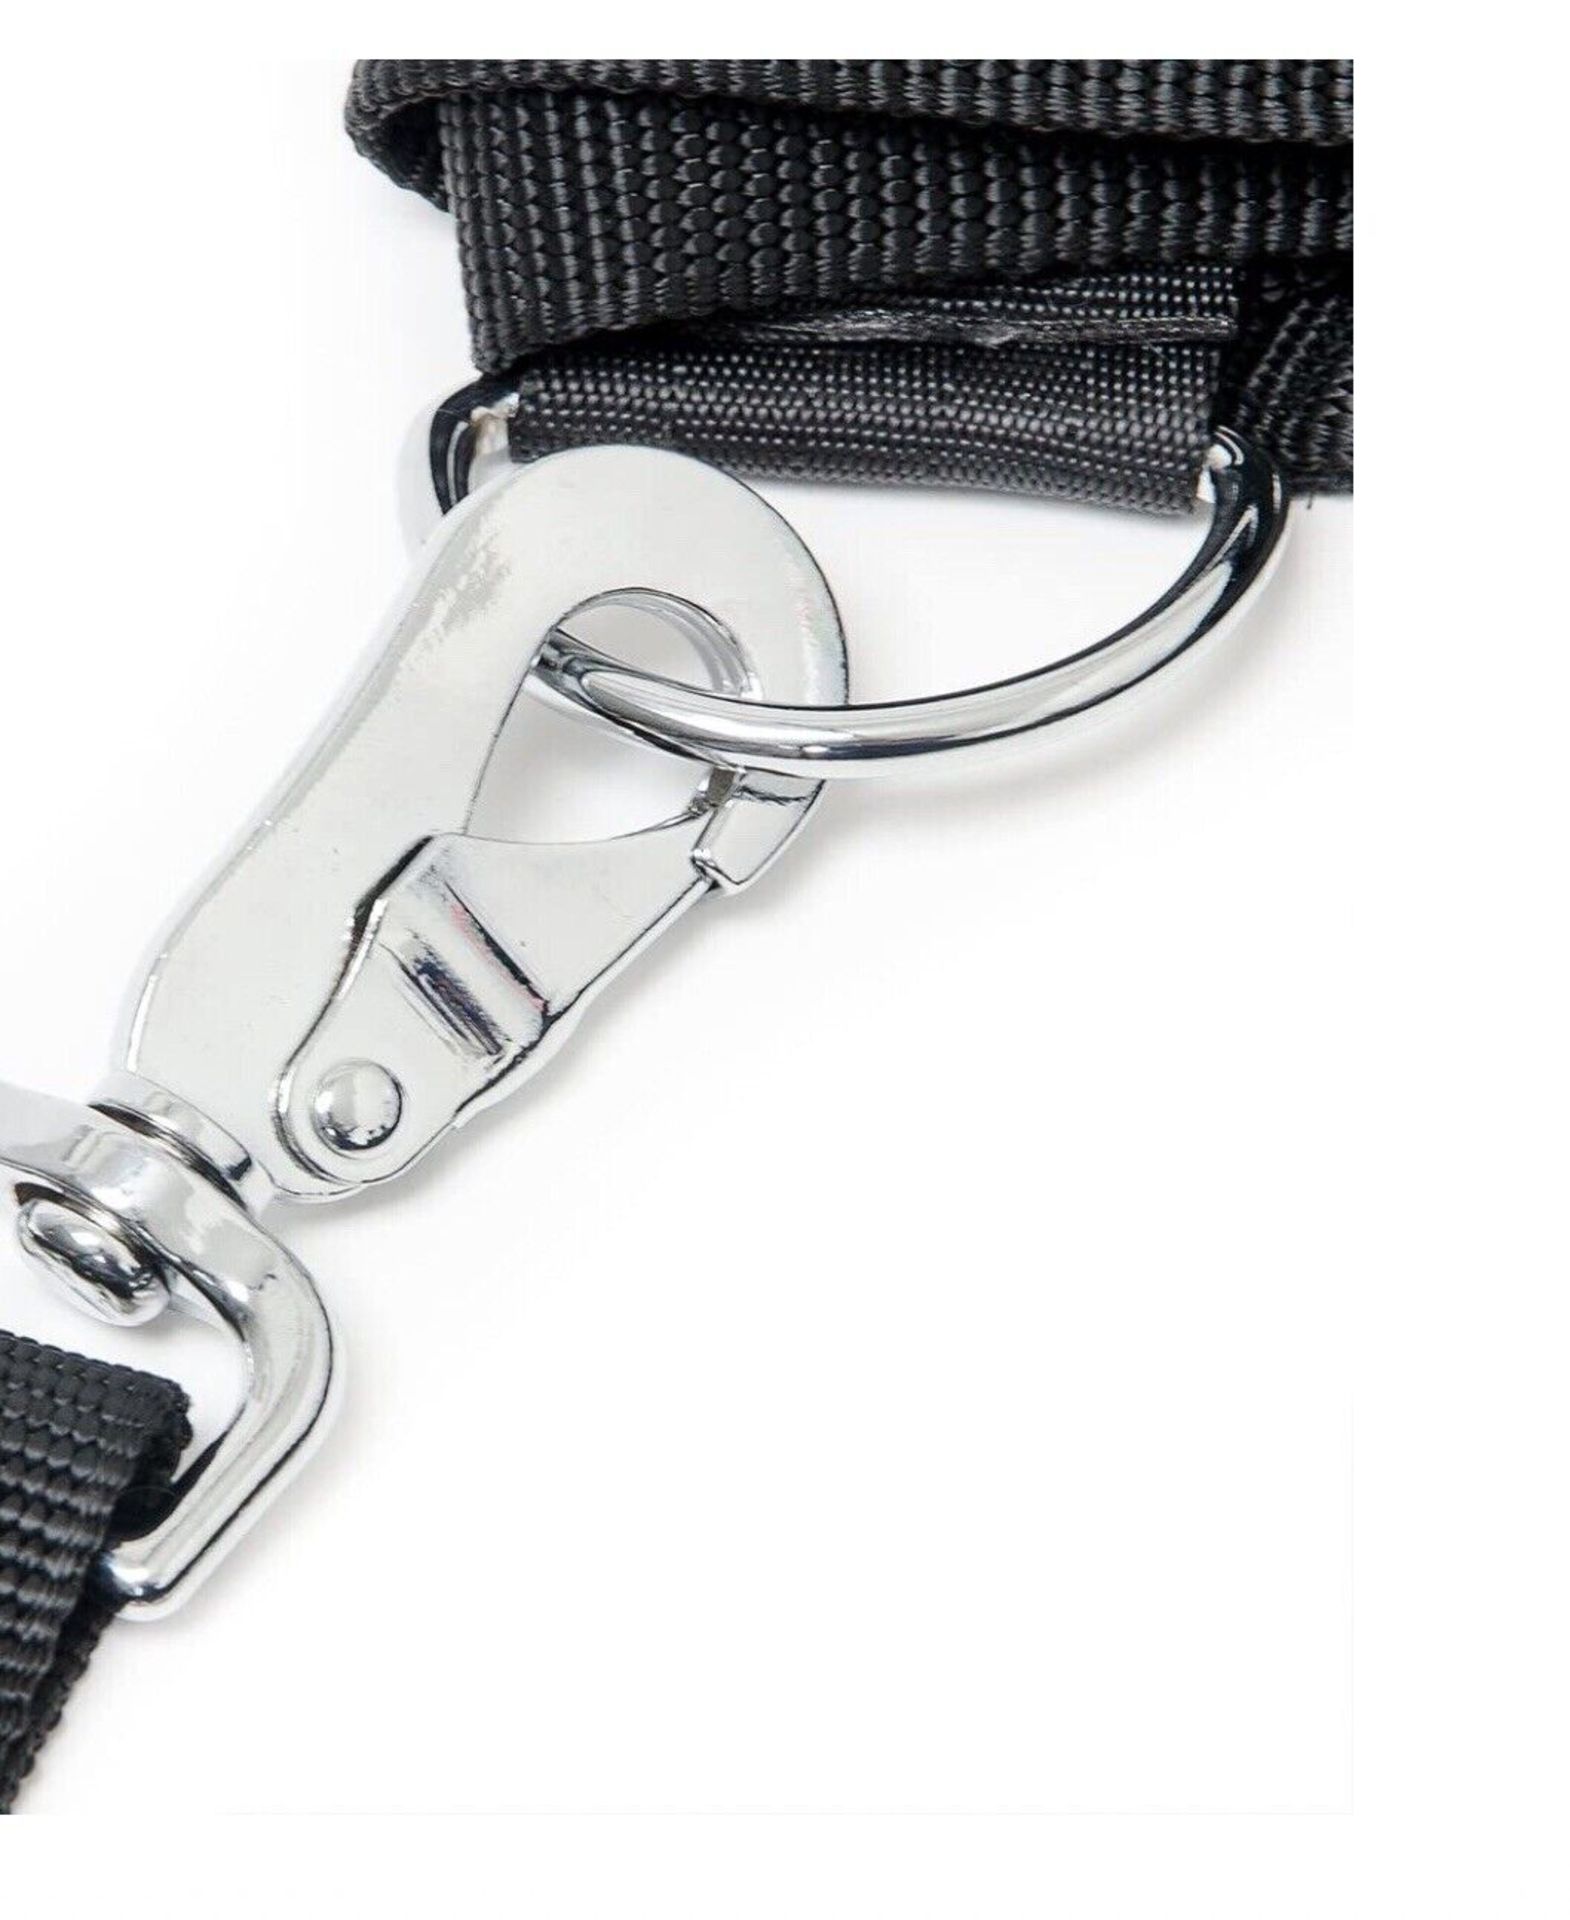 New Dog Car Seat Belt Adjustable Safety Harnesses Lead Travel Restraint for Dog Lead. - Image 4 of 4